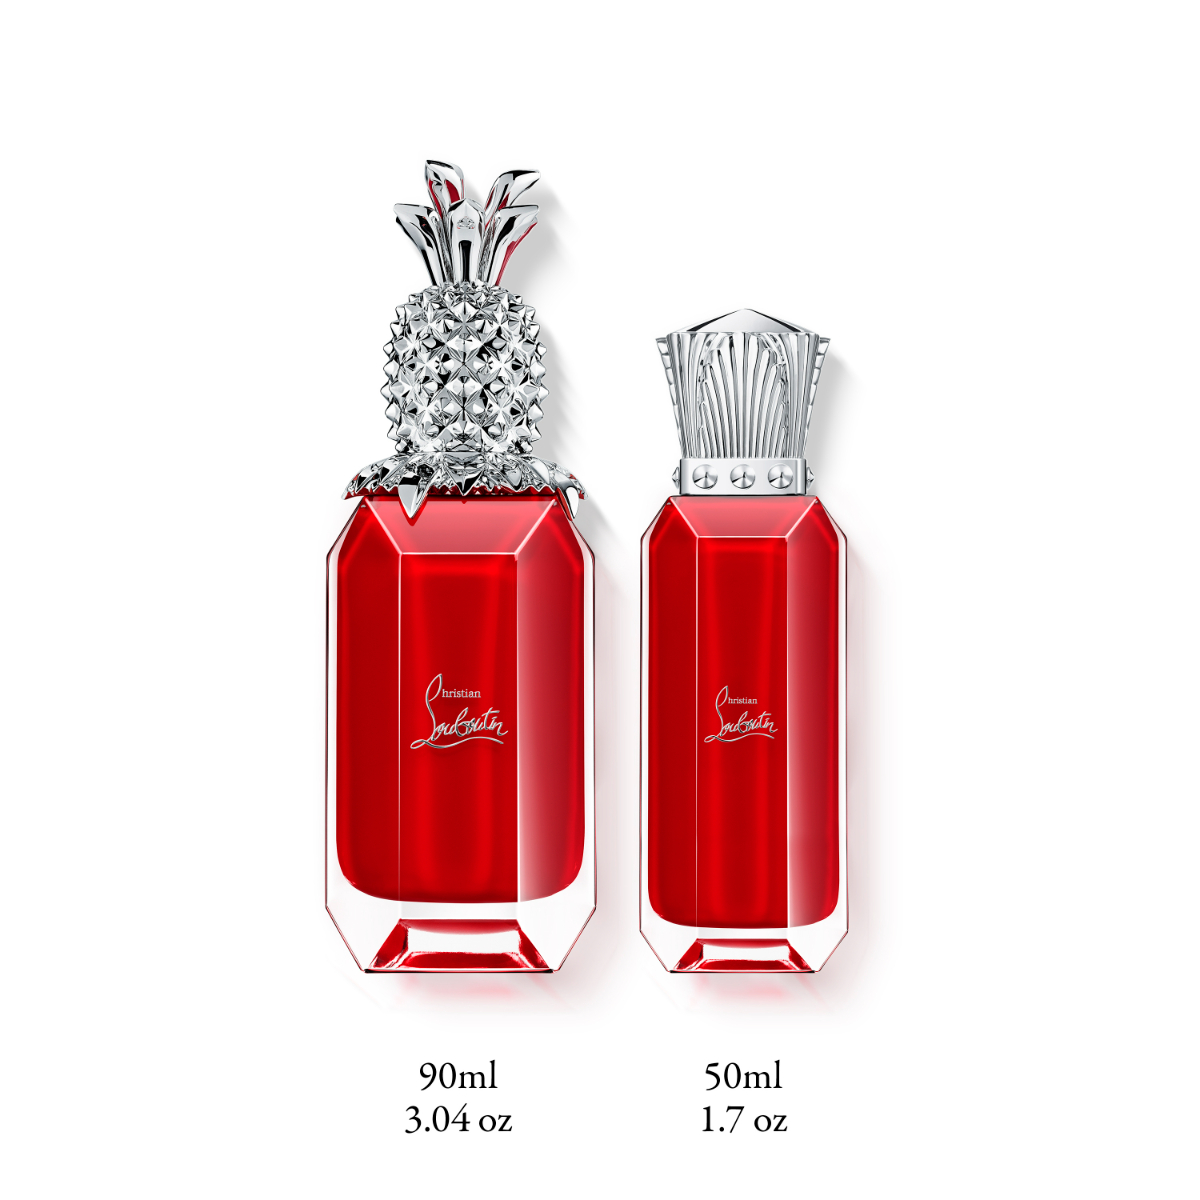 Loubicrown Christian Louboutin perfume - a fragrance for women 2020